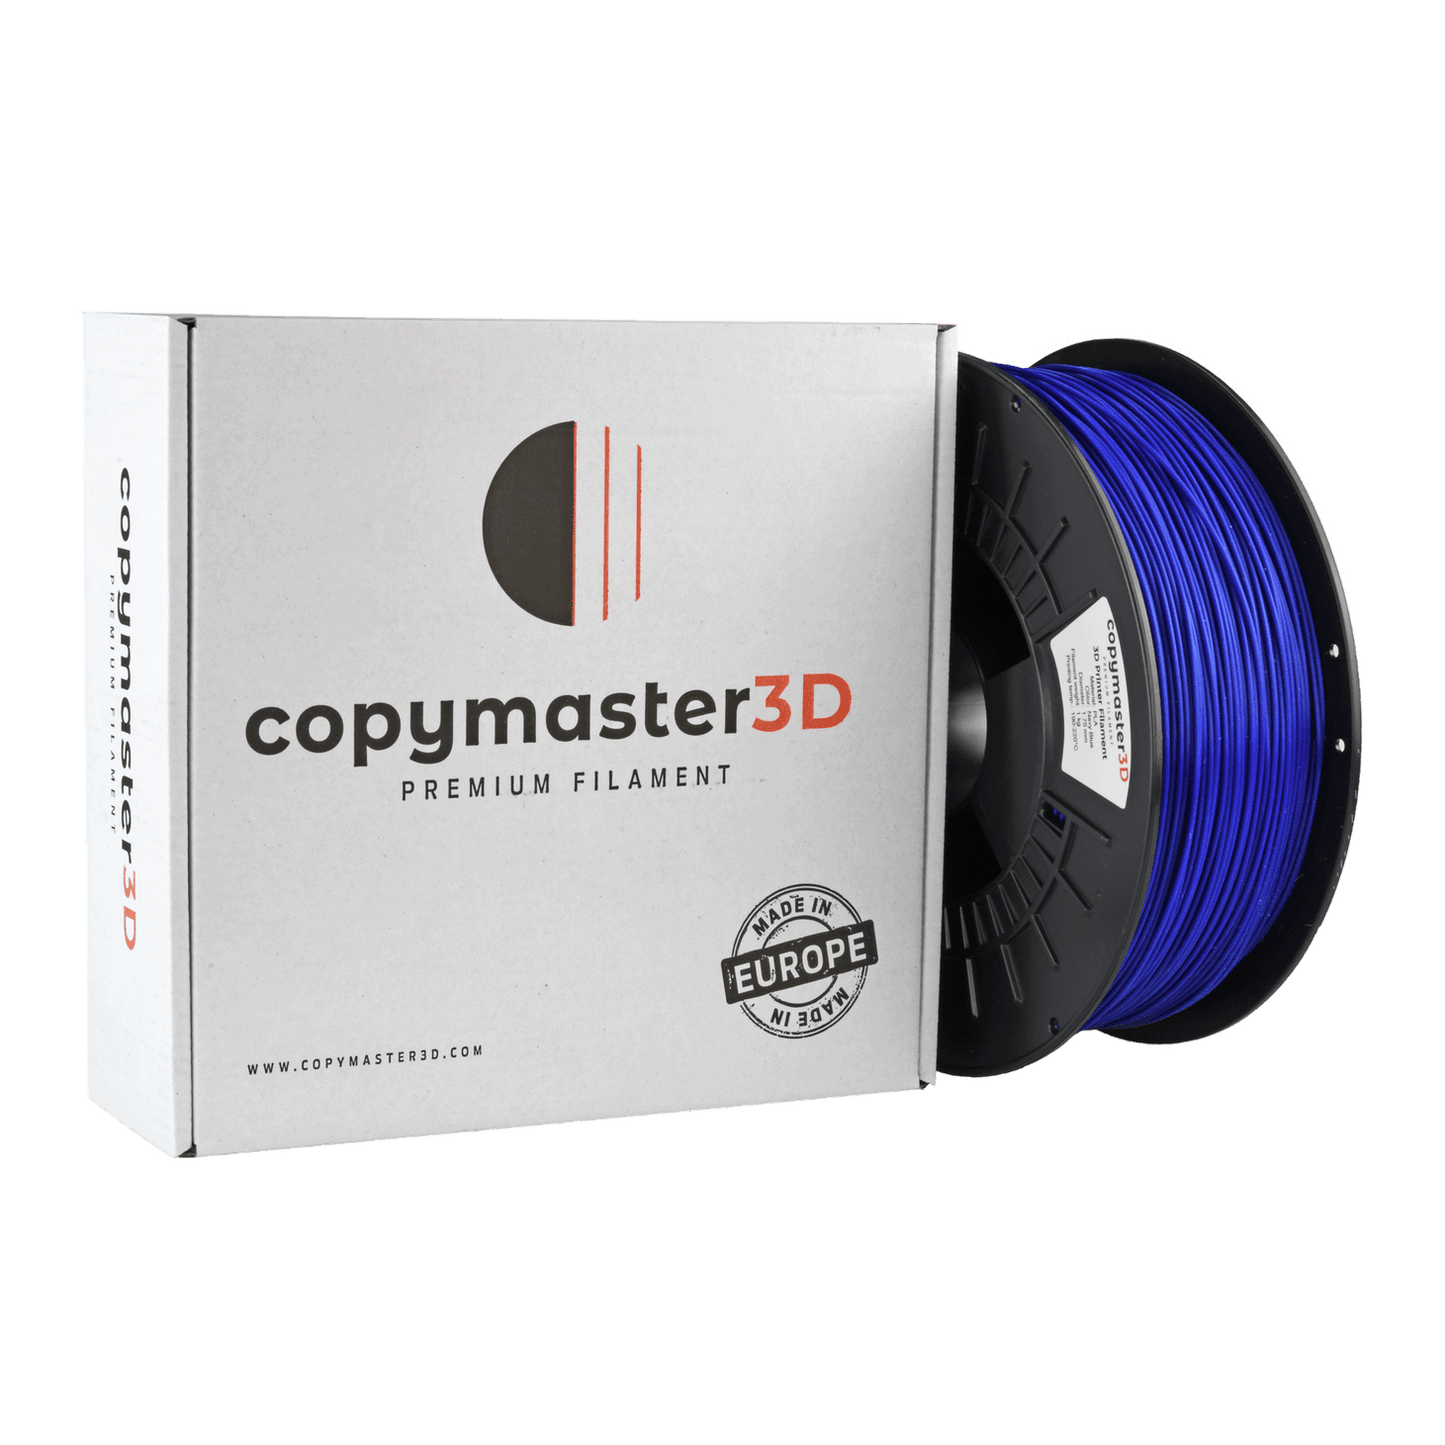 Copymaster3D Premium PLA Filament 1.75mm 1KG Navy Blue